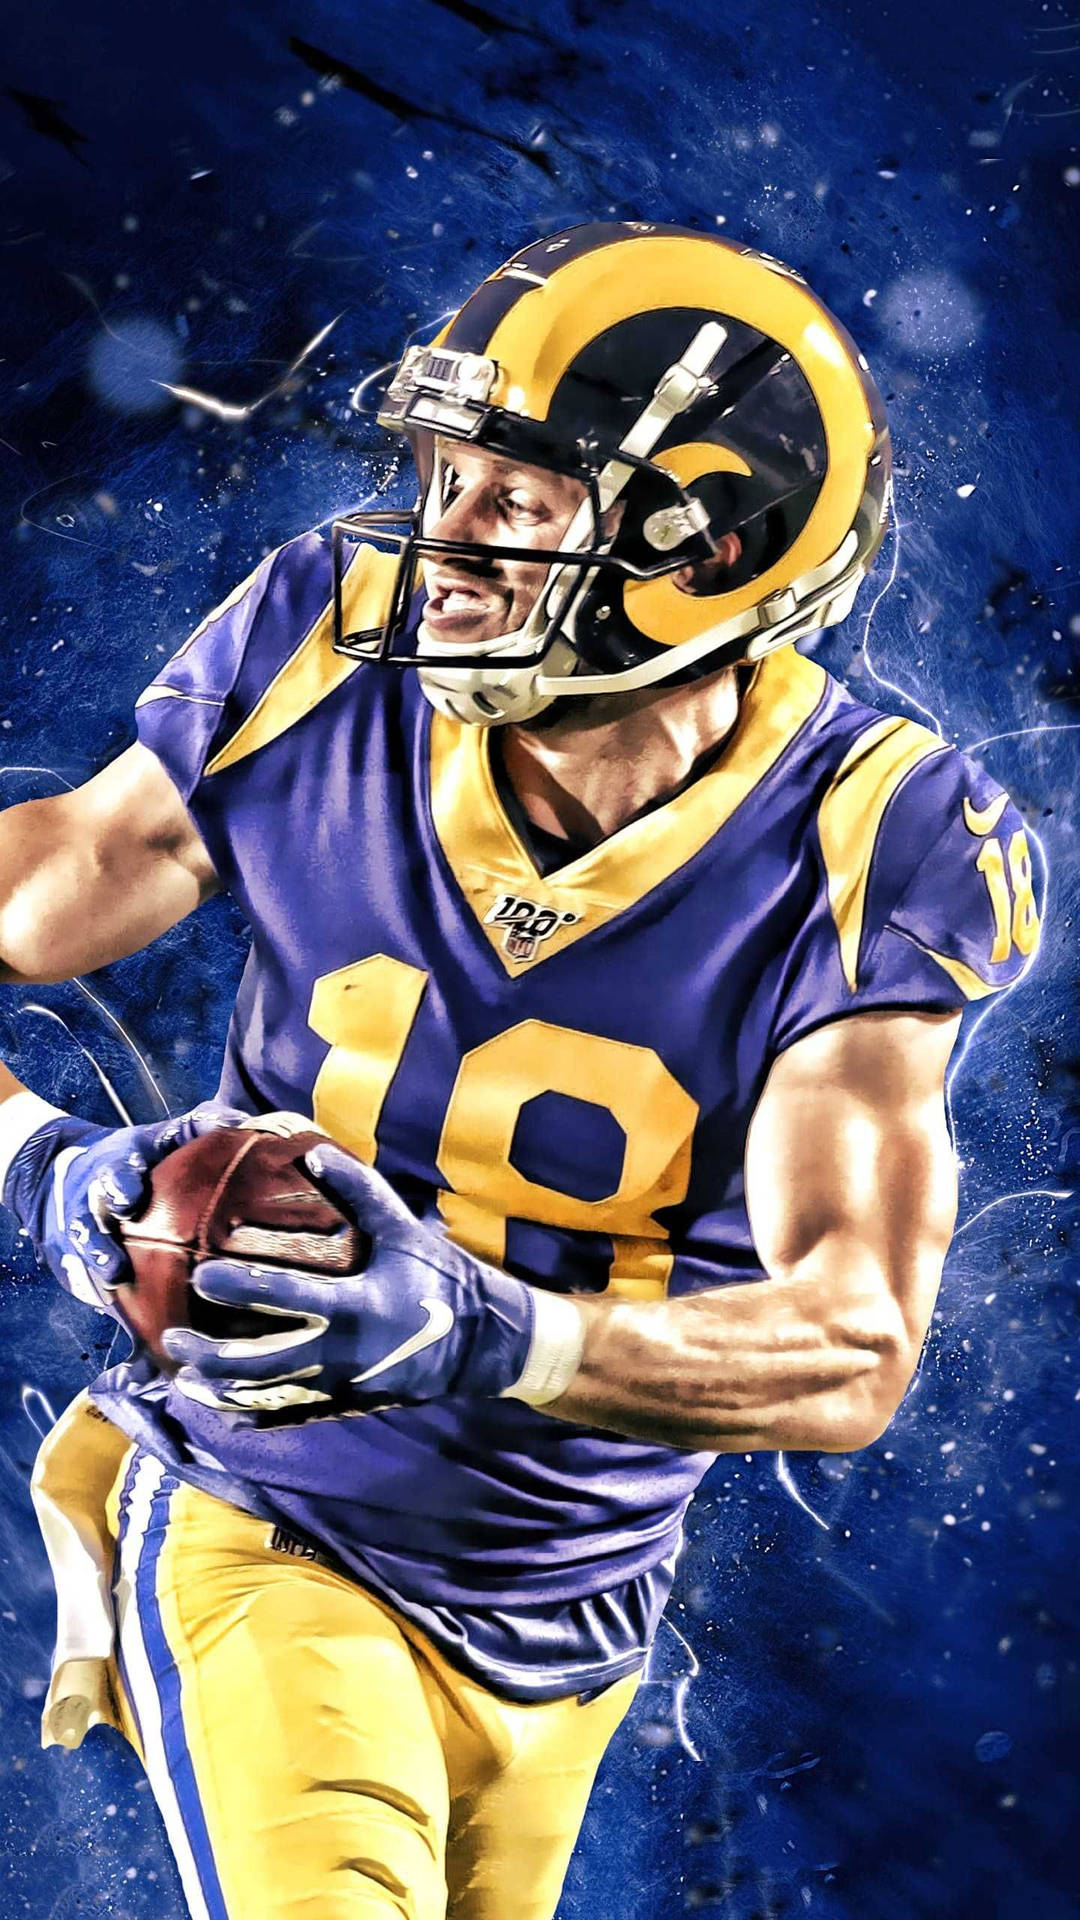 Cooper Kupp NFL LA Rams Photo Manipulation Art Wallpaper